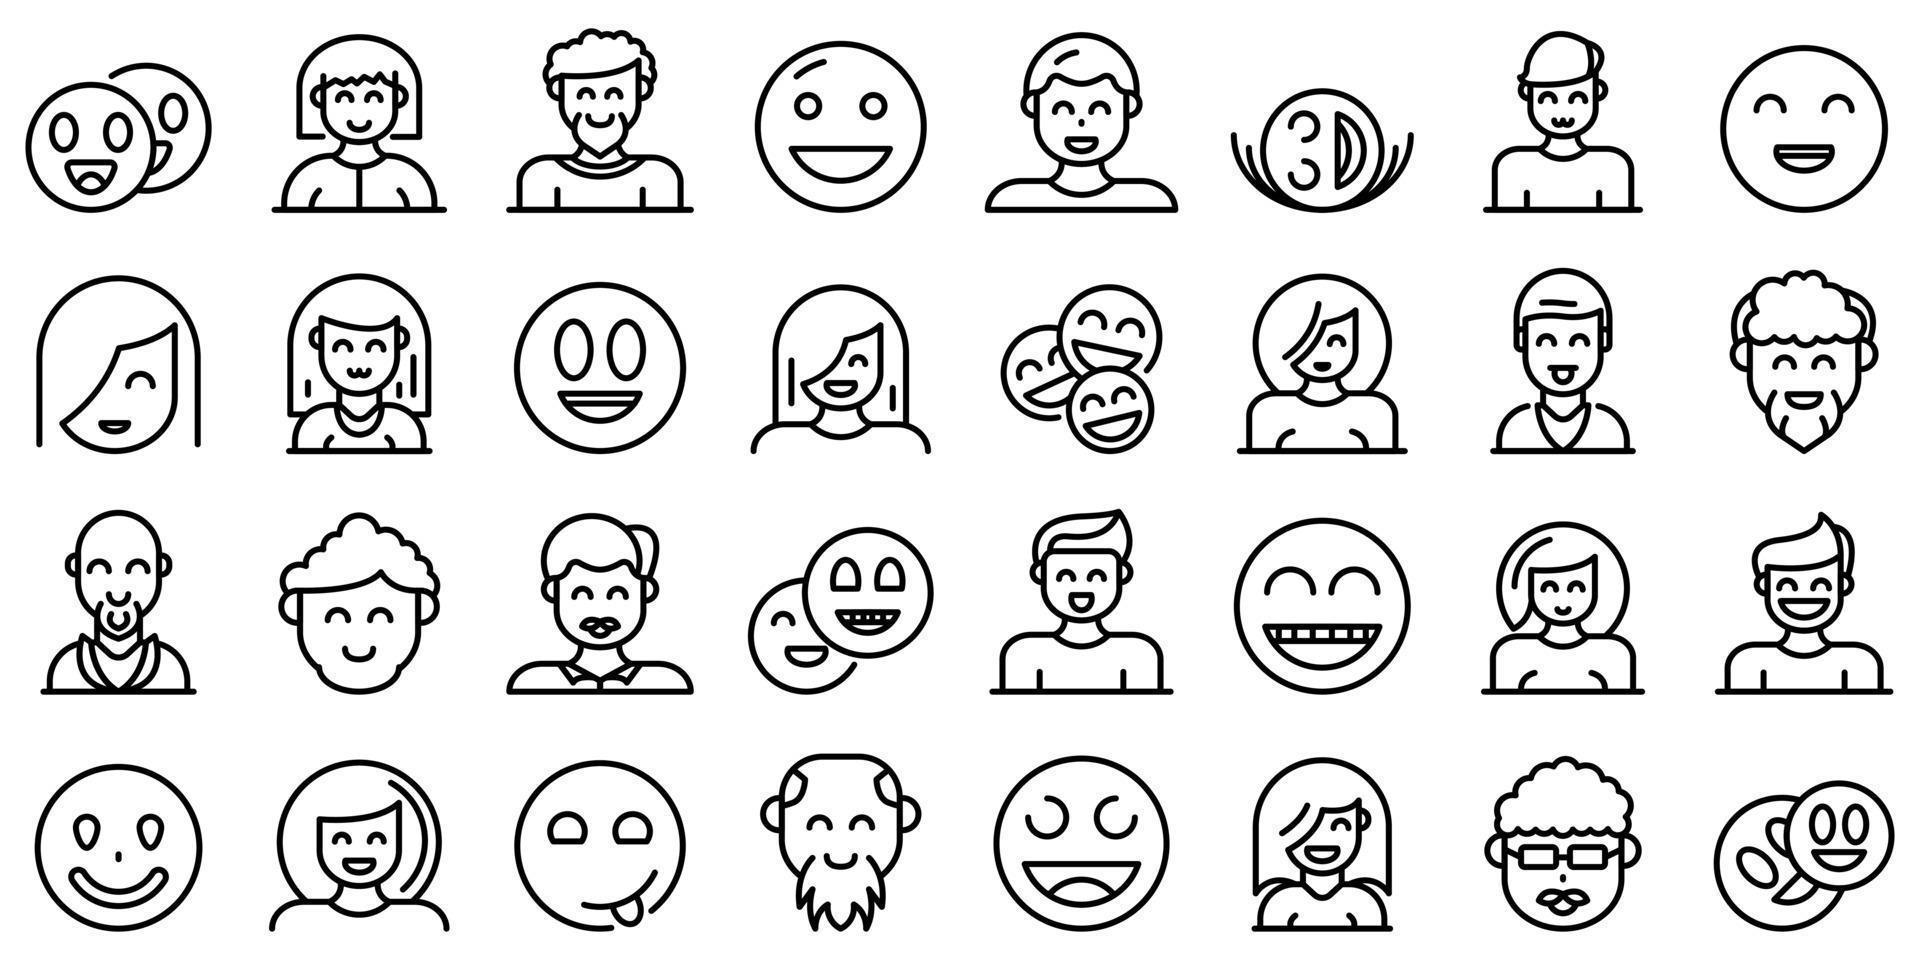 leende människor ikoner set, dispositionsstil vektor